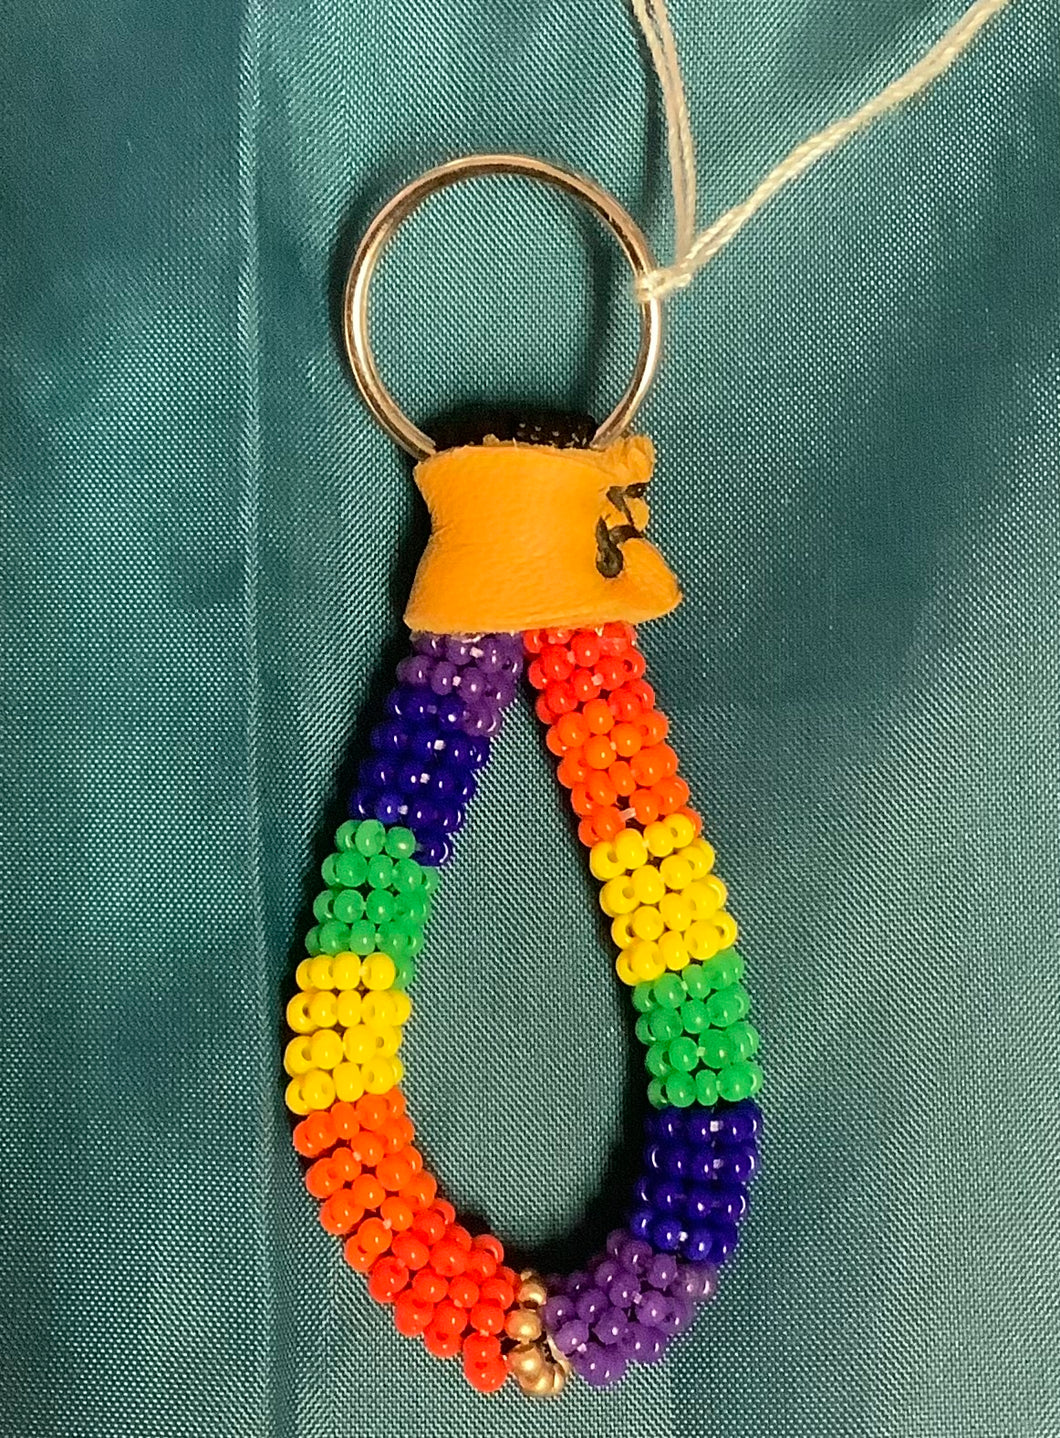 Beaded Pride Keychain